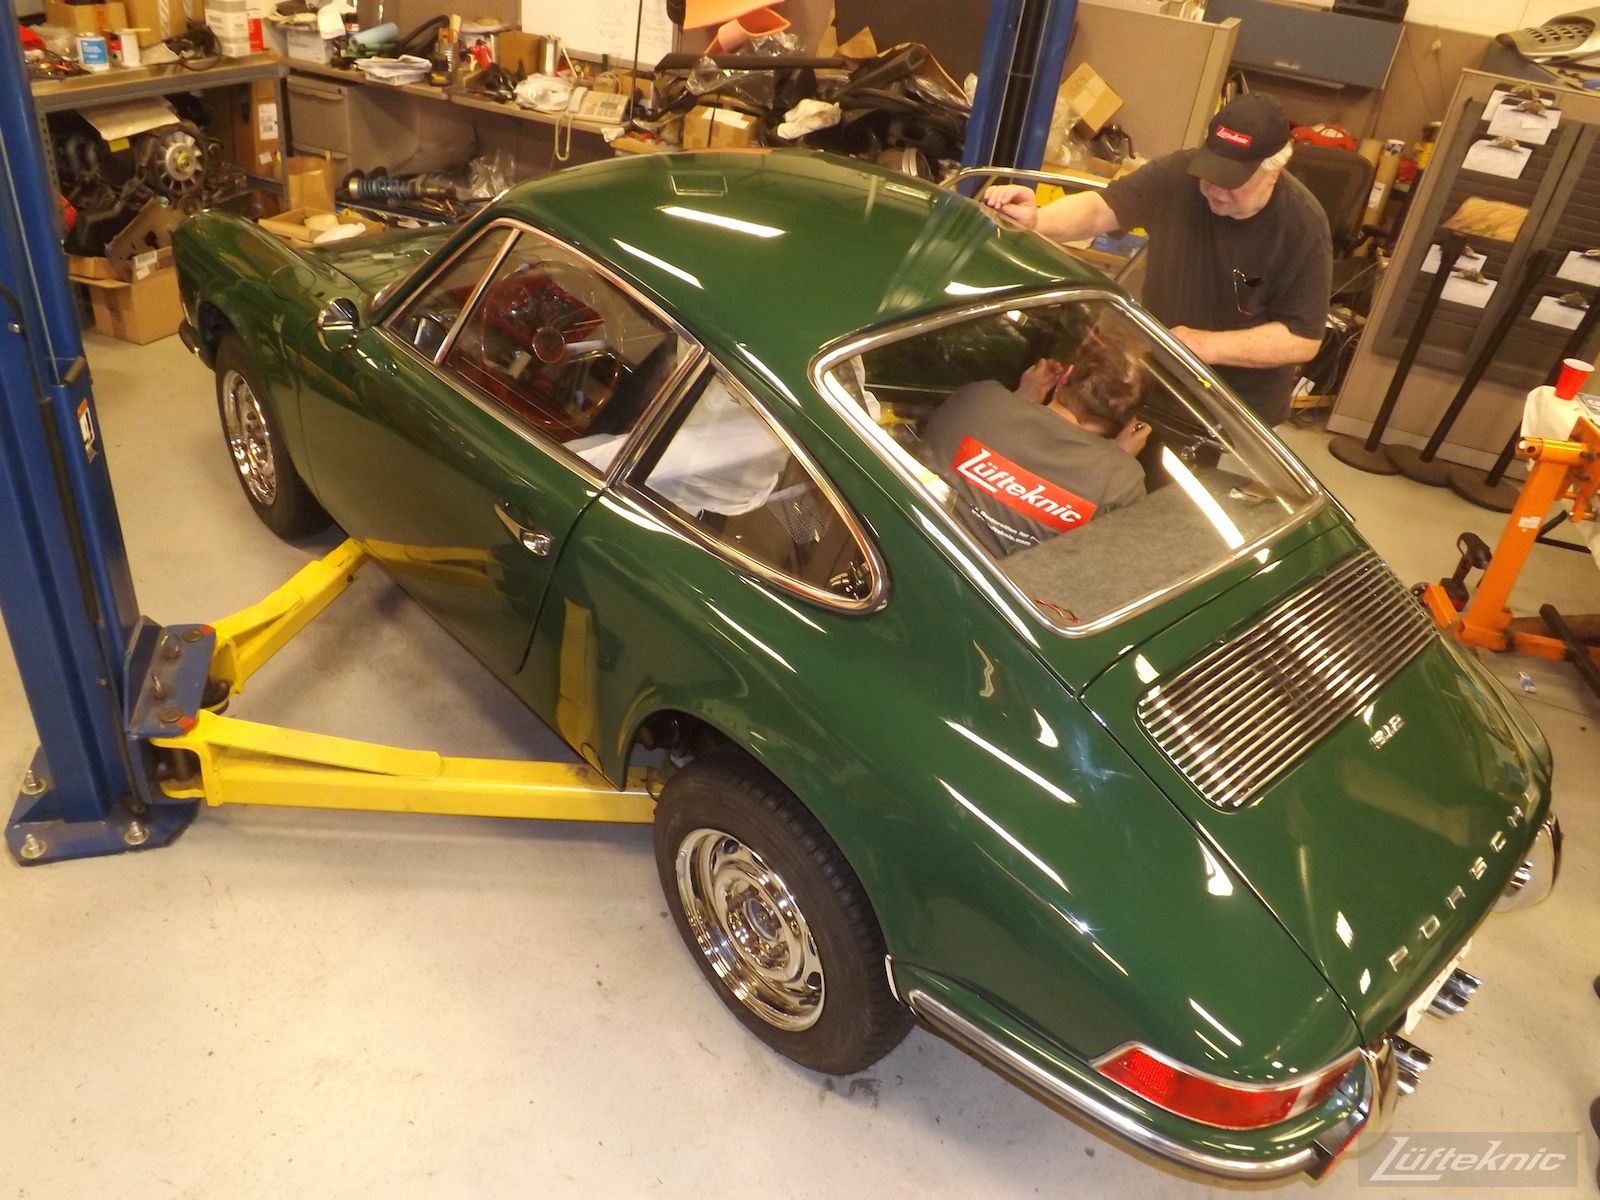 Installing windows into an Irish Green Porsche 912 undergoing restoration at Lufteknic.